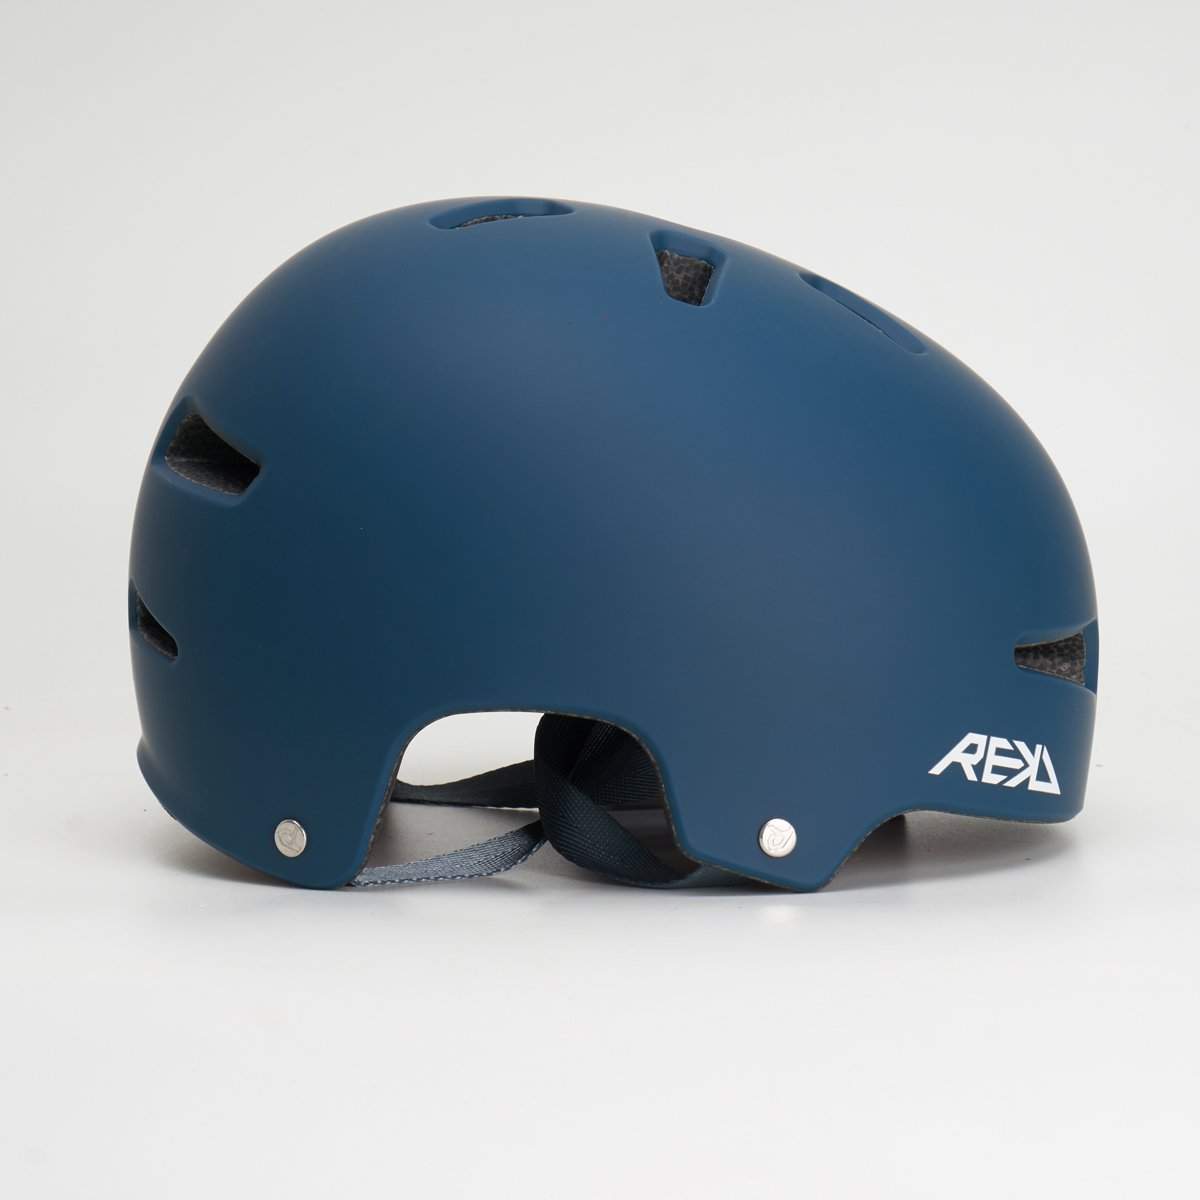 REKD Ultralite In Mold Blue Helmet-REKD Protection-Aggressive Skate,blue,Helmets,Protective Gear